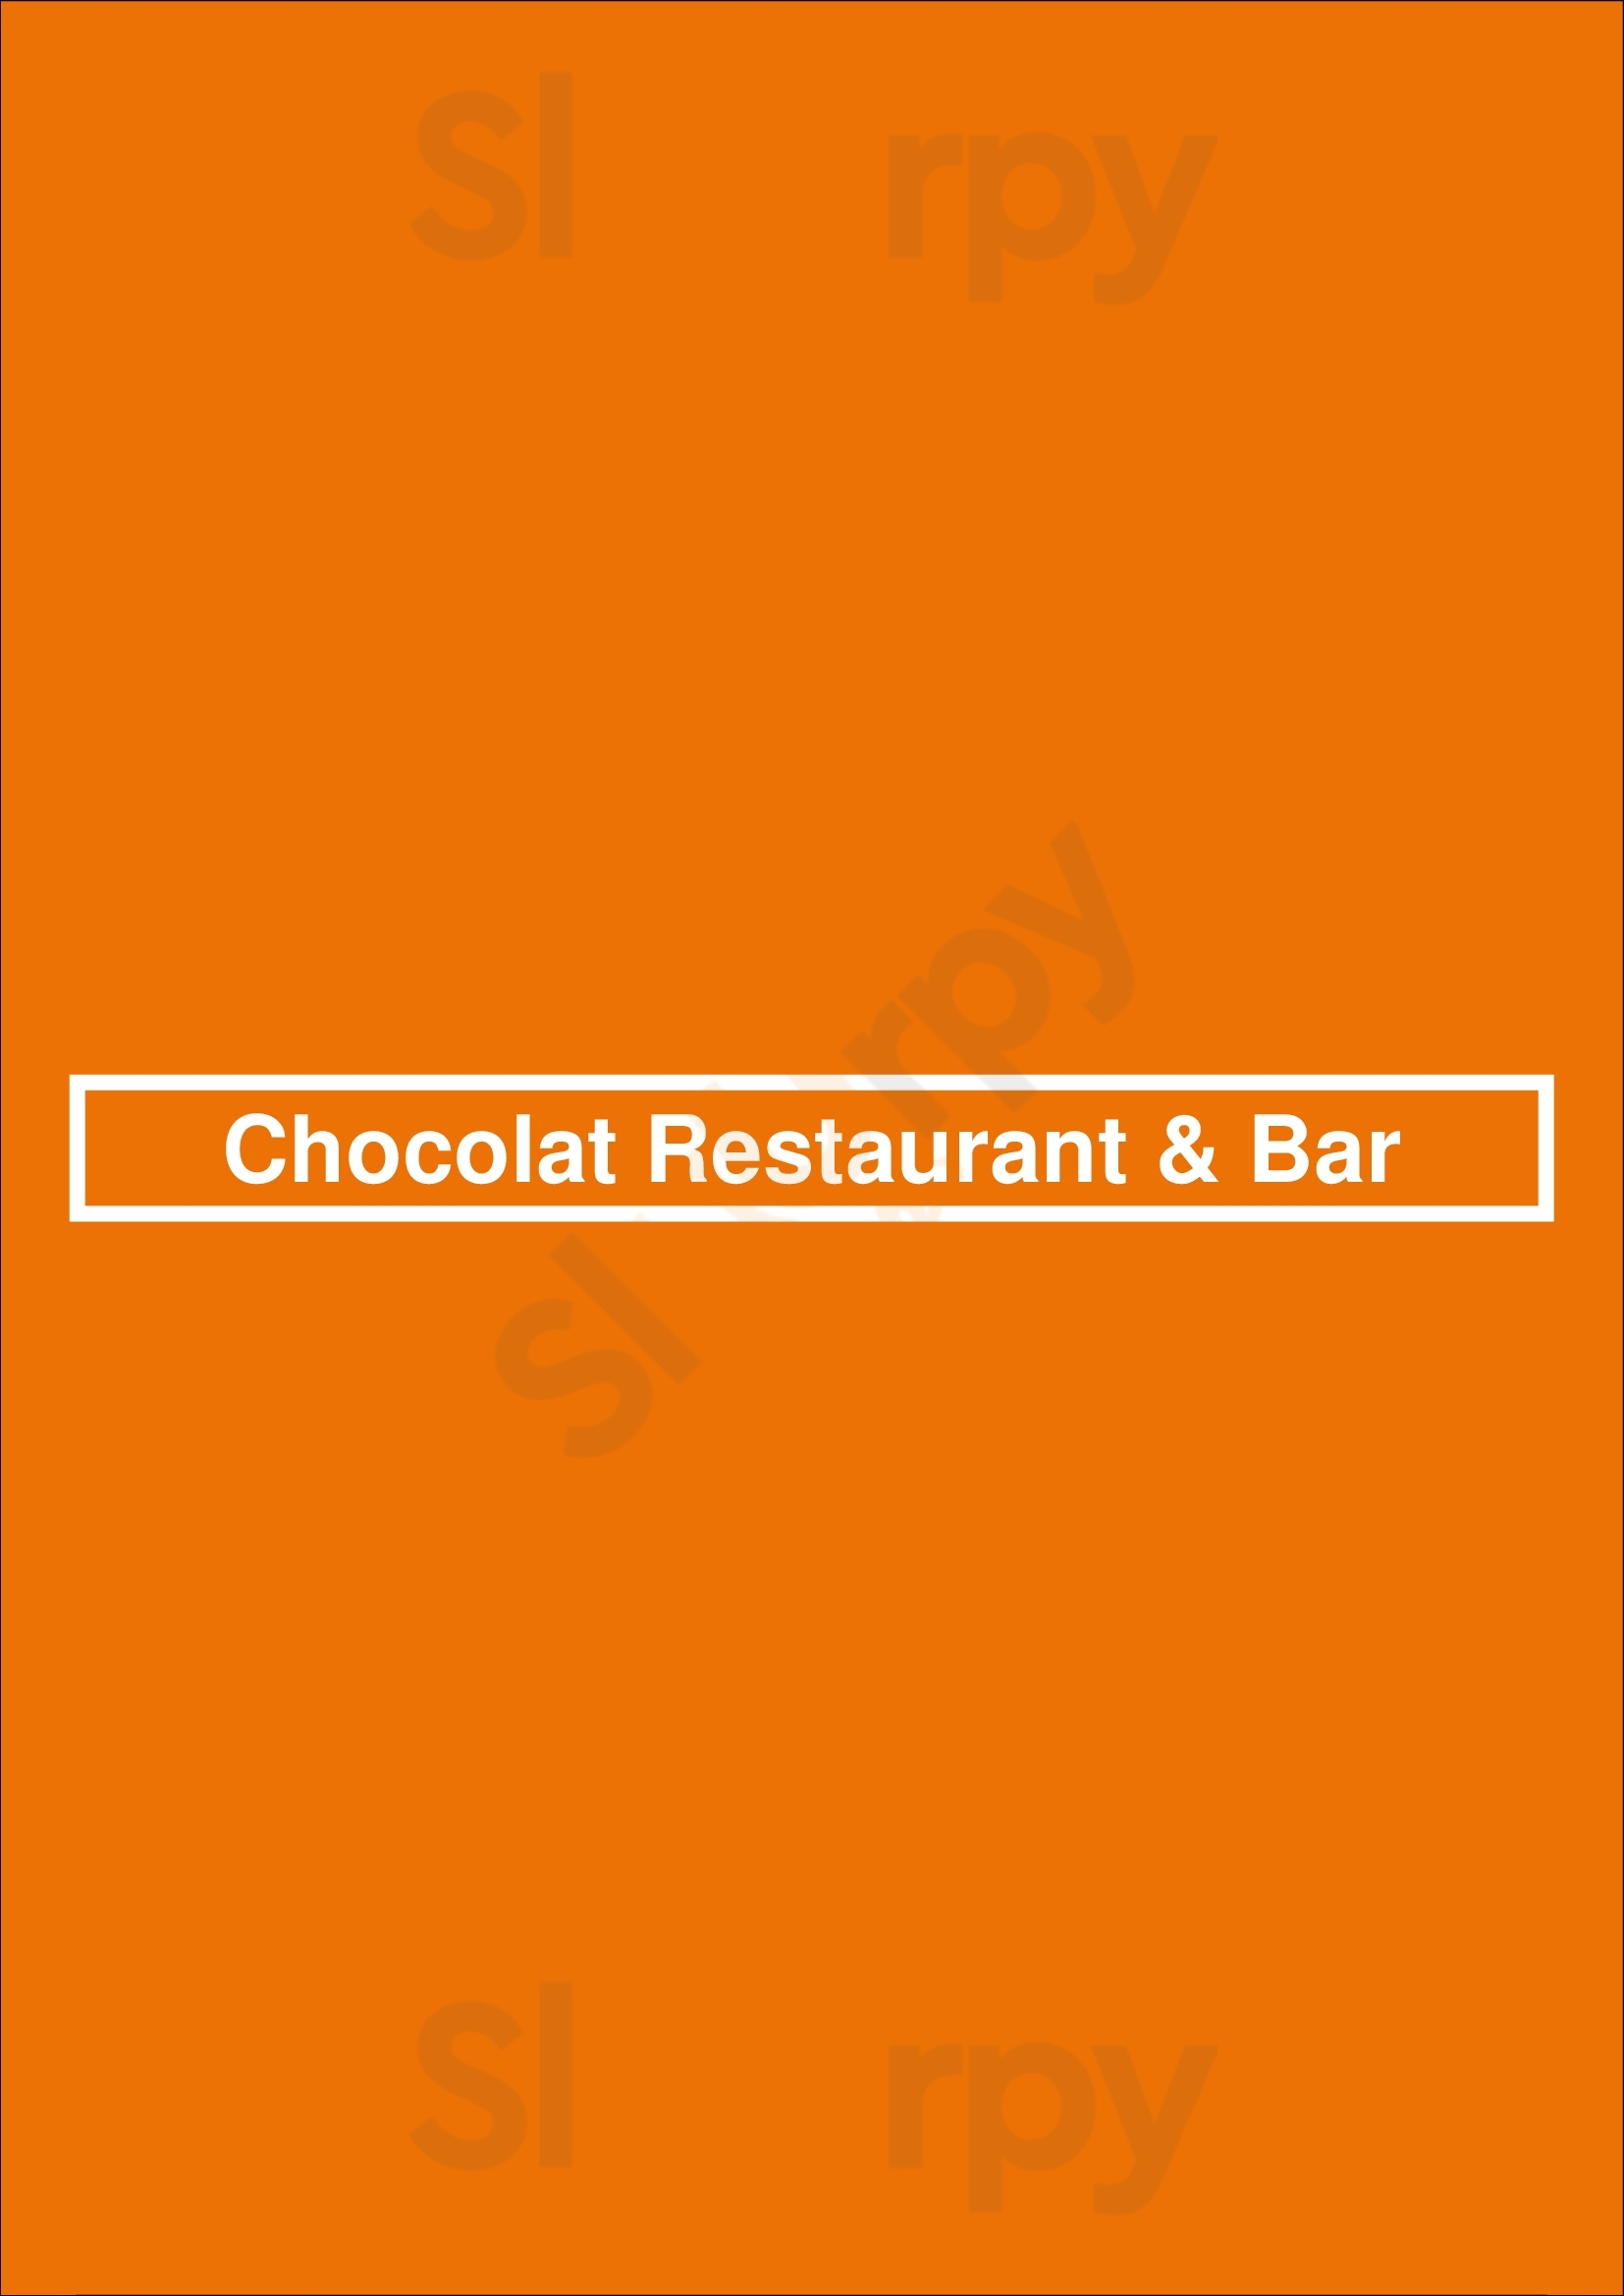 Chocolat Restaurant & Bar New York City Menu - 1